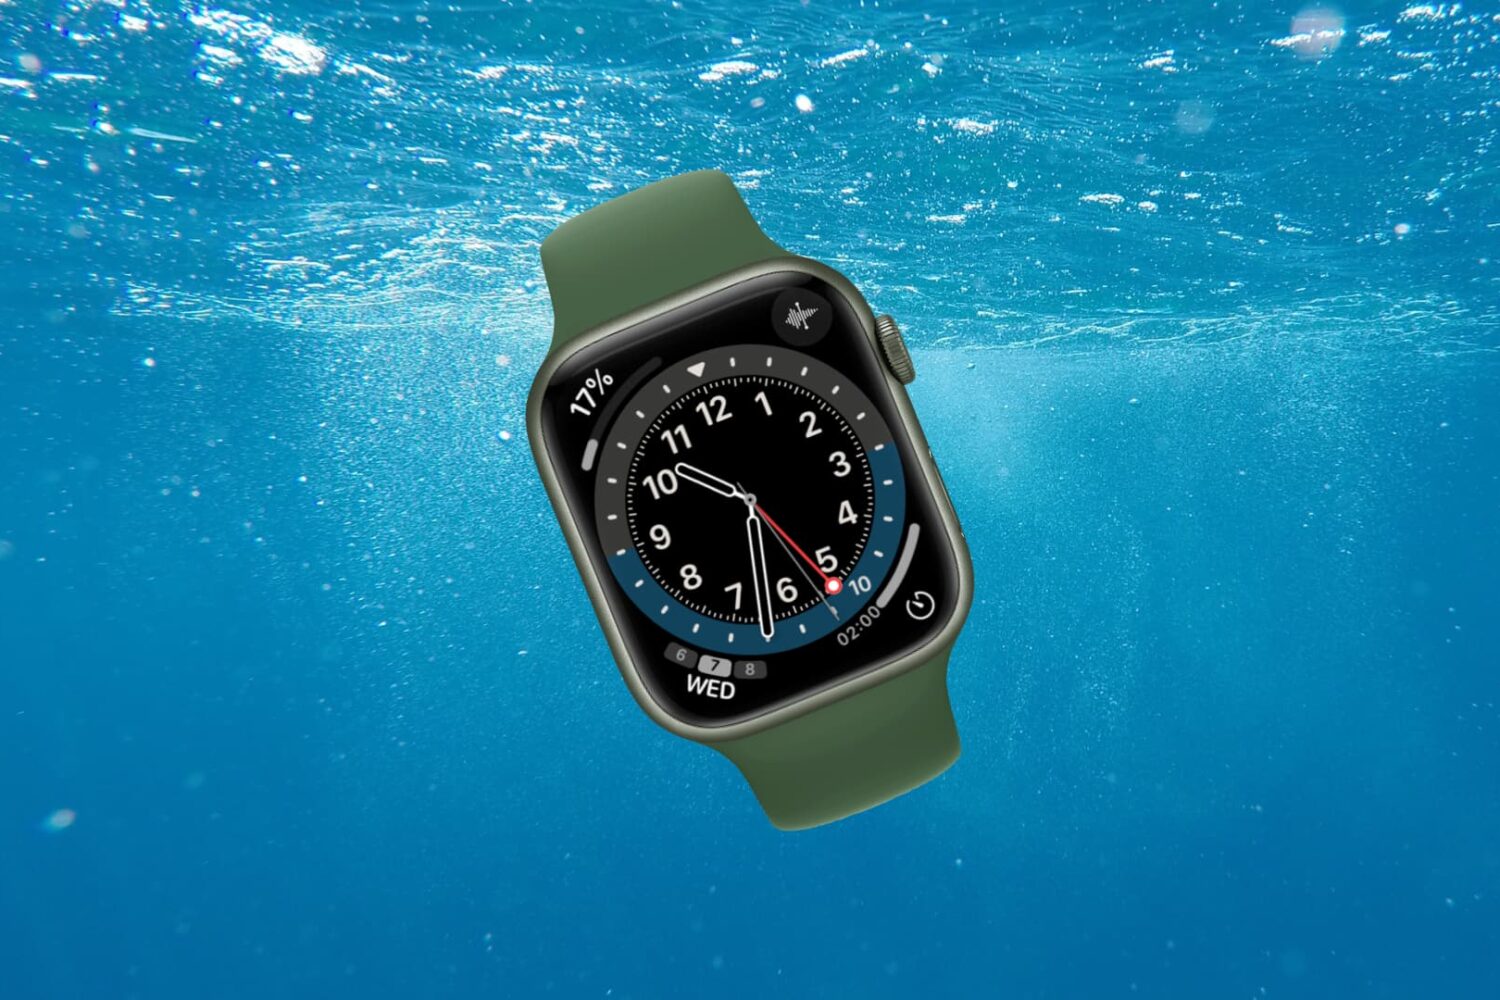 Dropped Apple Watch in water